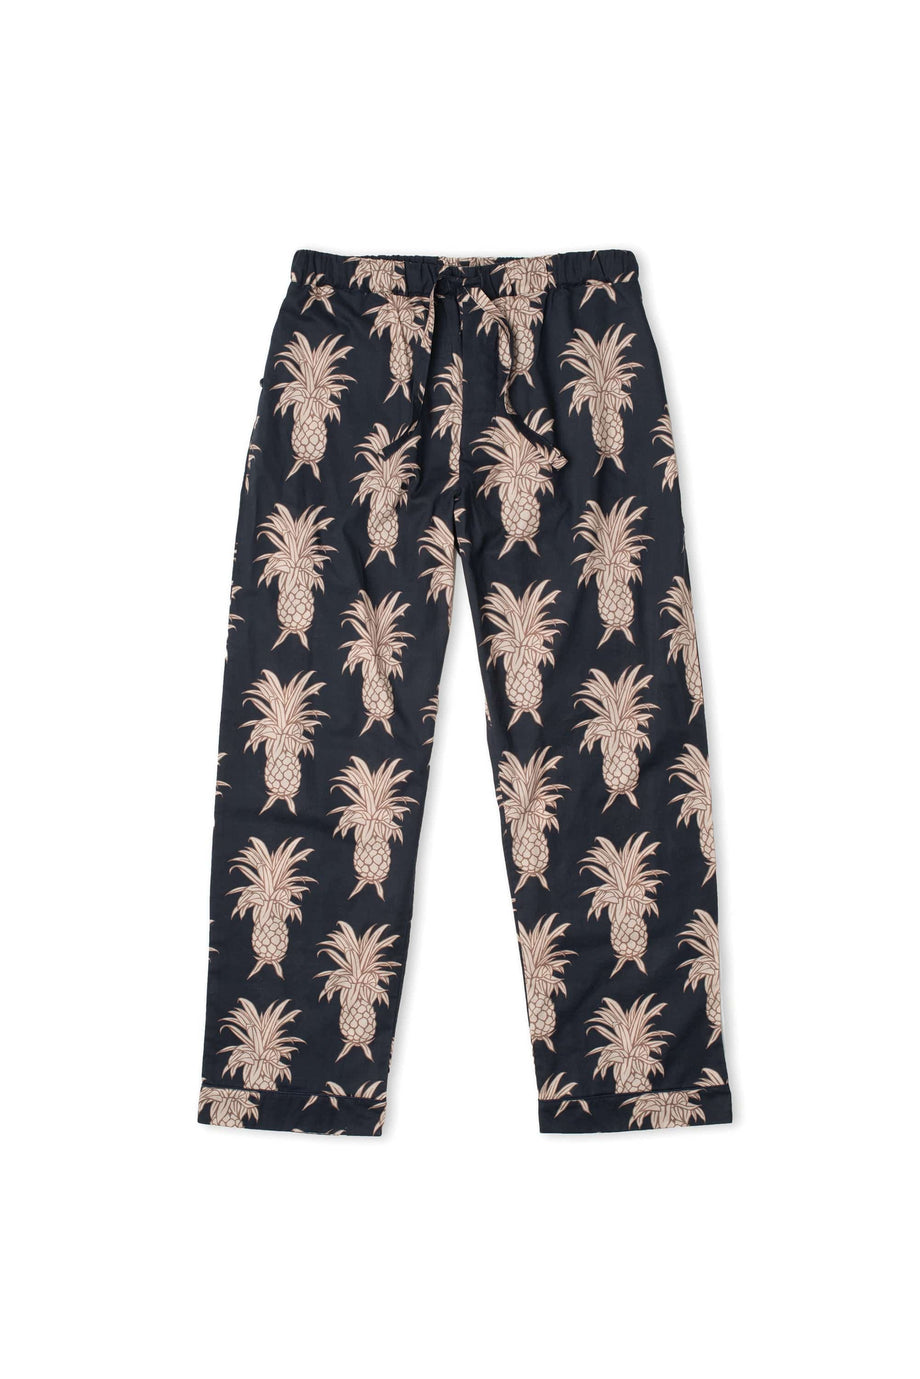 Men’s Pyjama Trousers Howie Pineapple Black/Gold